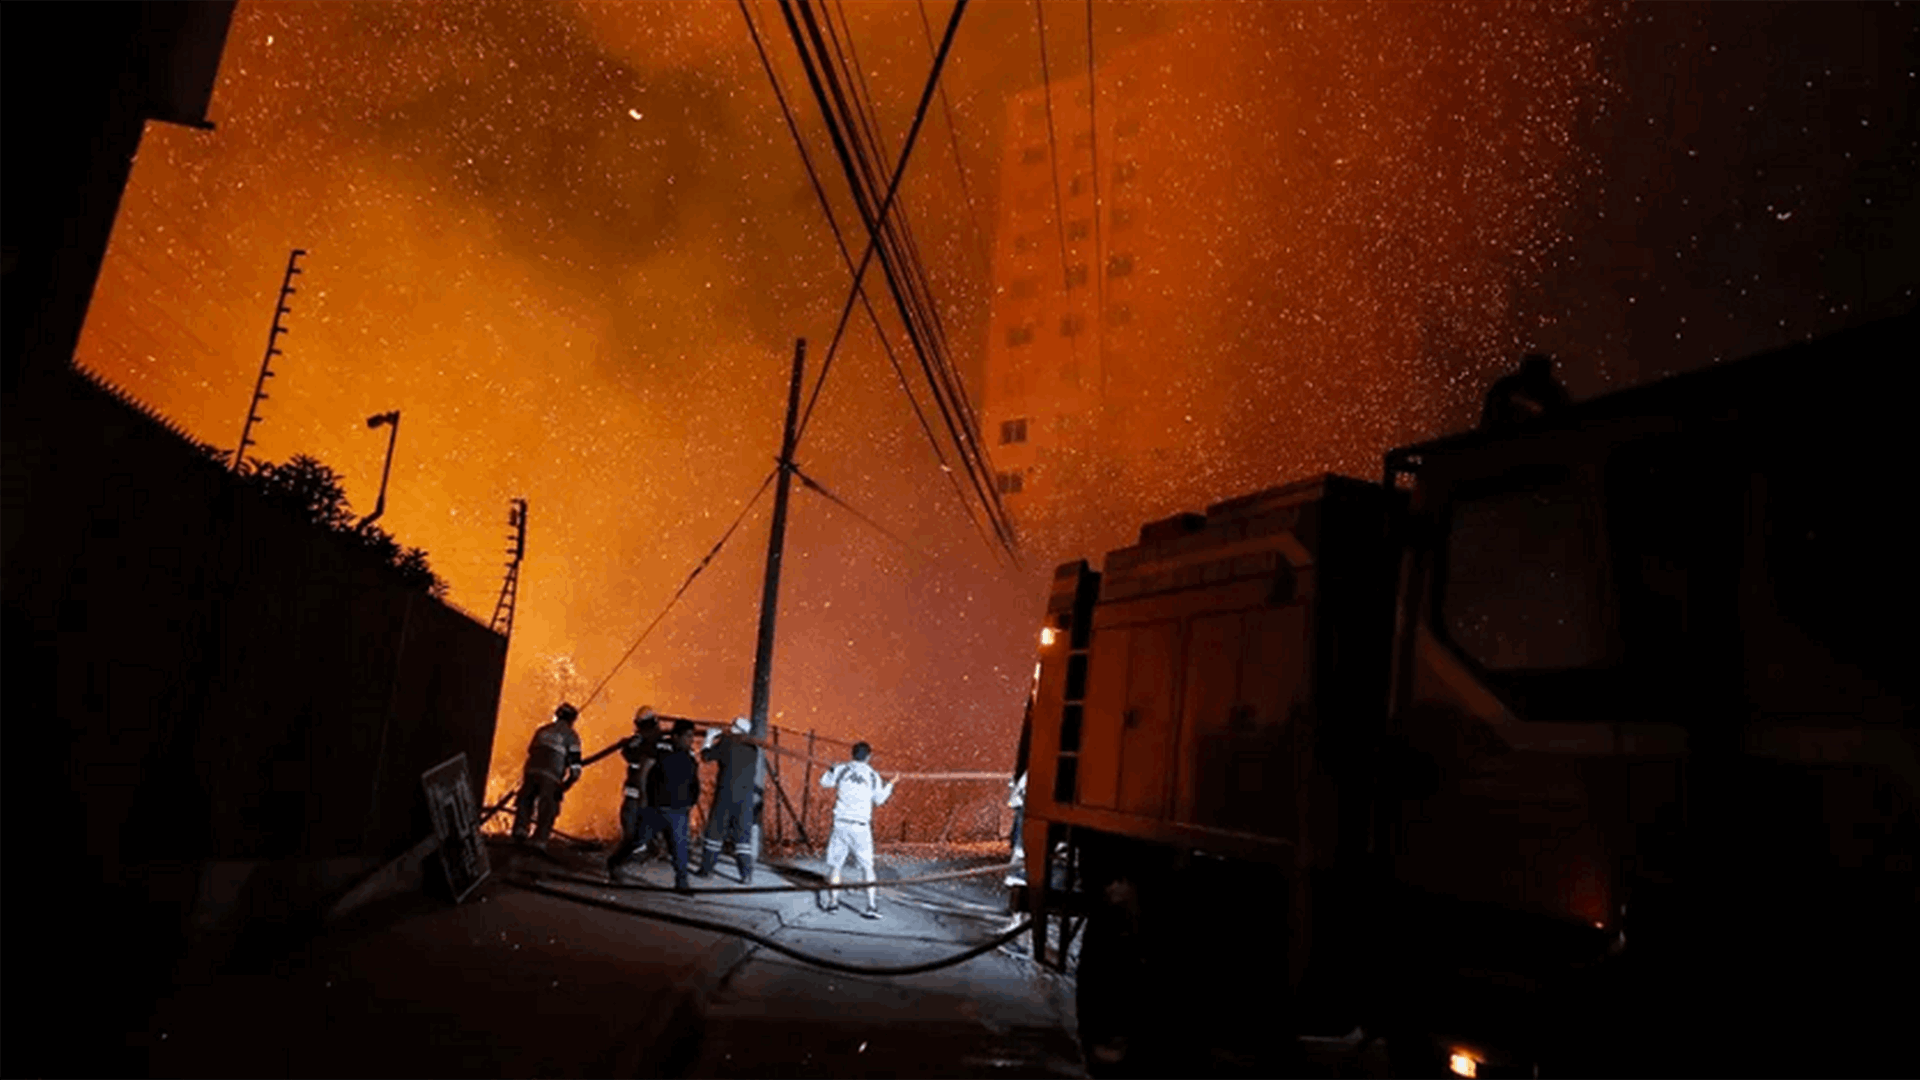 سقوط قتيلين وتضرّر 400 مسكن في حريق في تشيلي